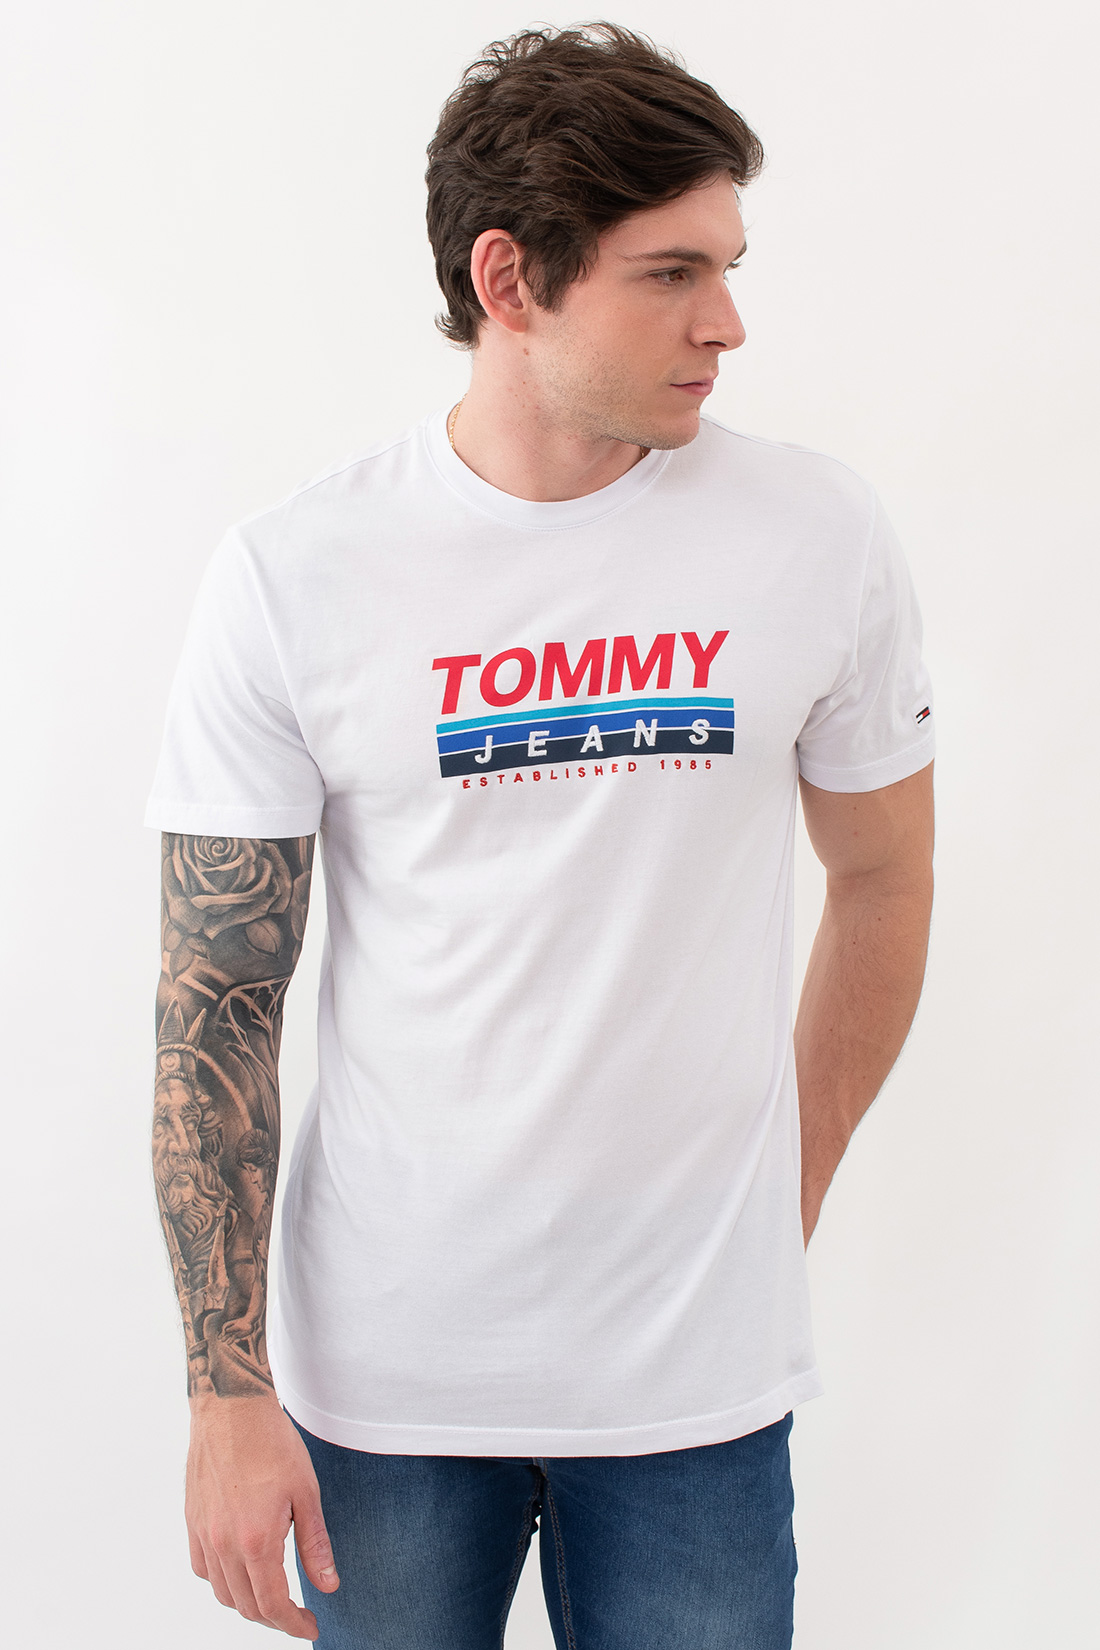 Camiseta Mc Tommy Hilfiger Established